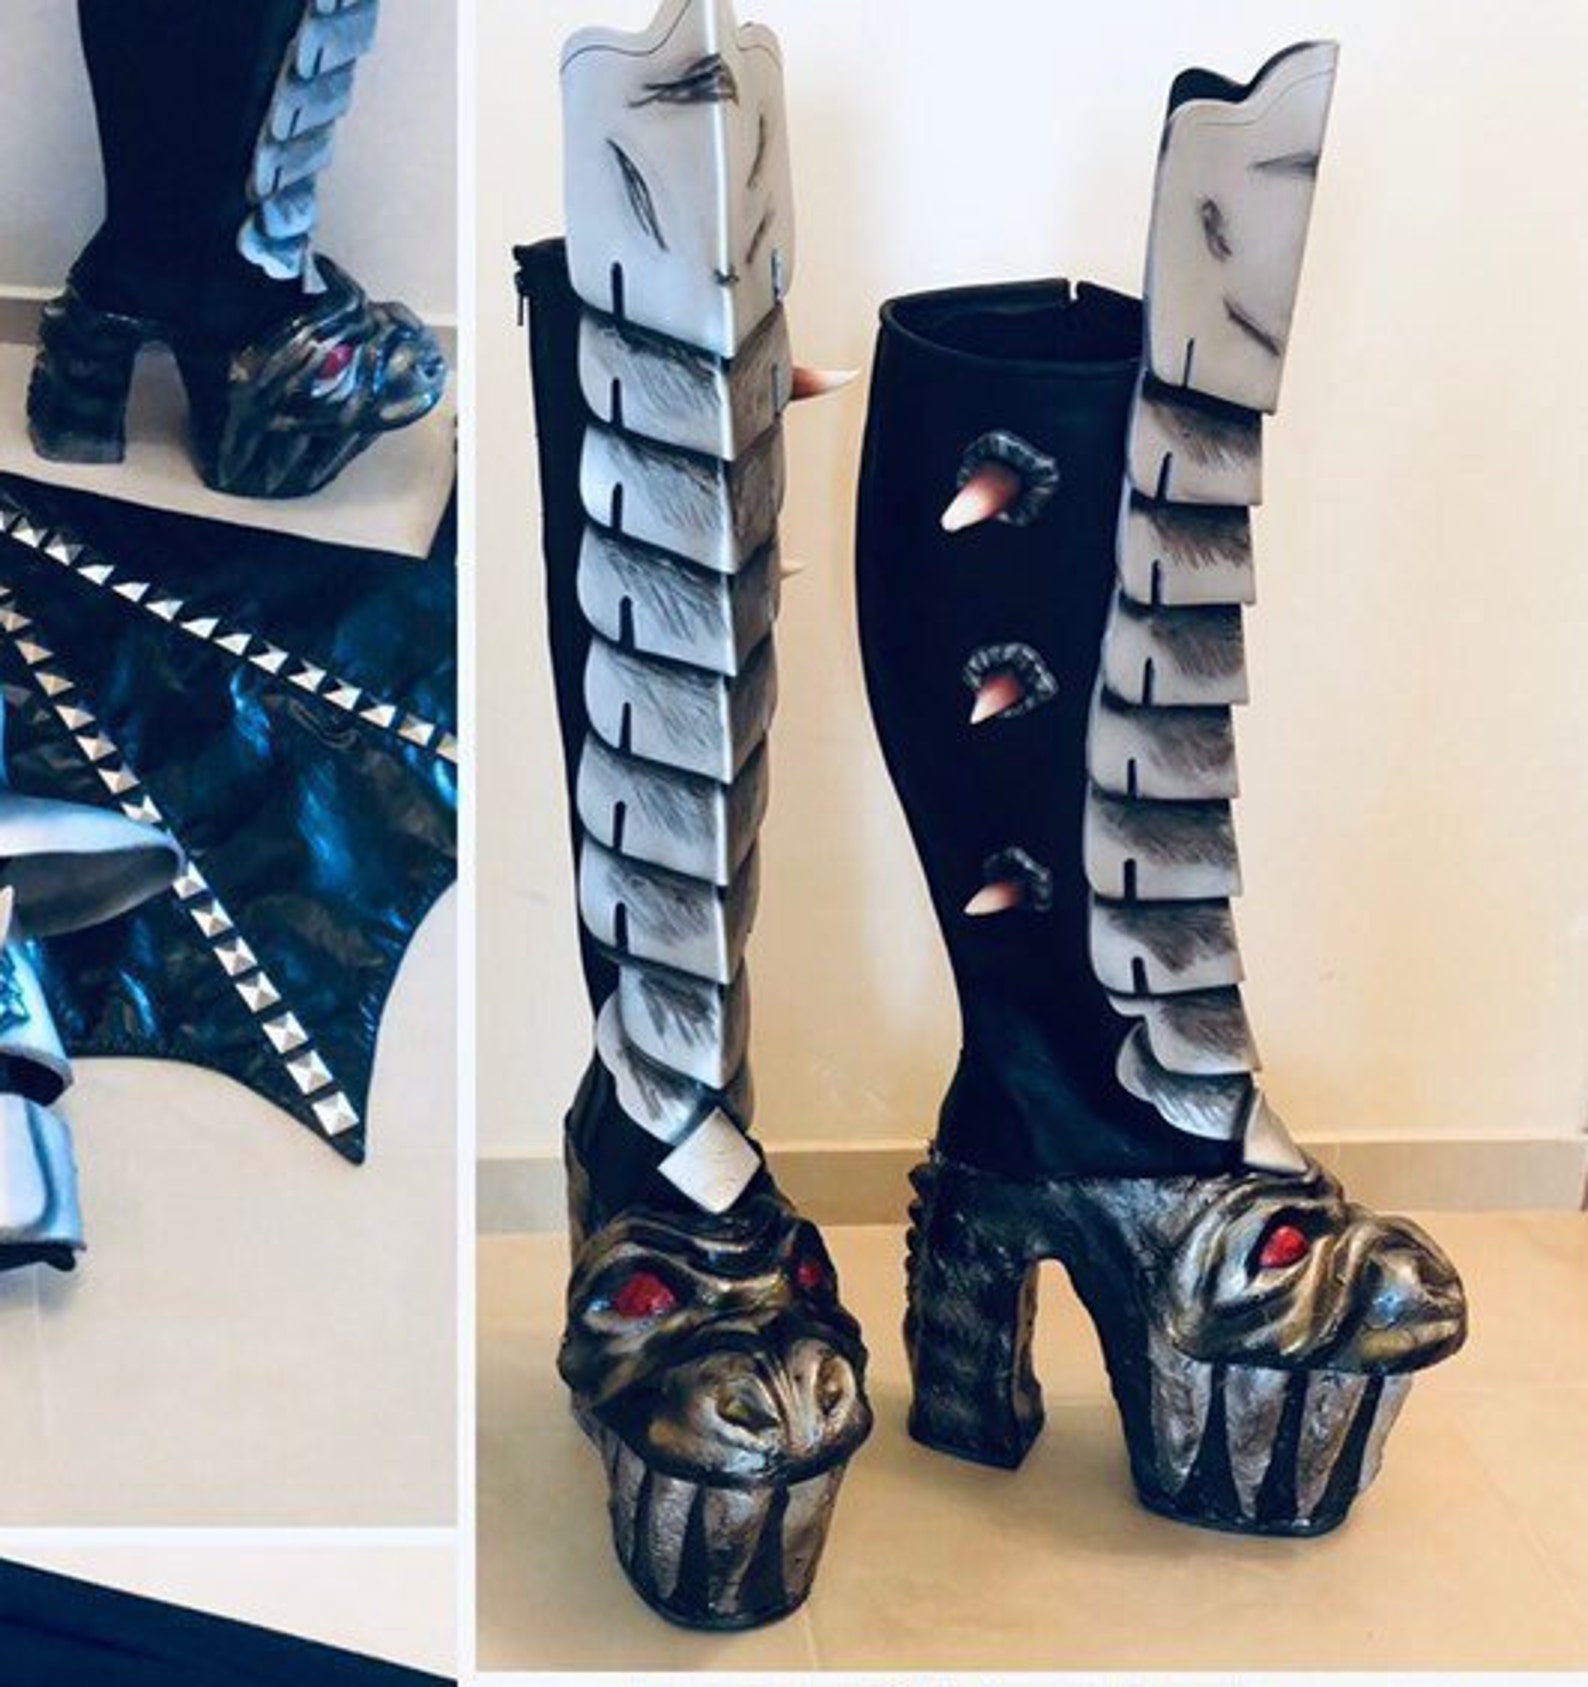 Demon Monster Gene muzzle boots | Etsy